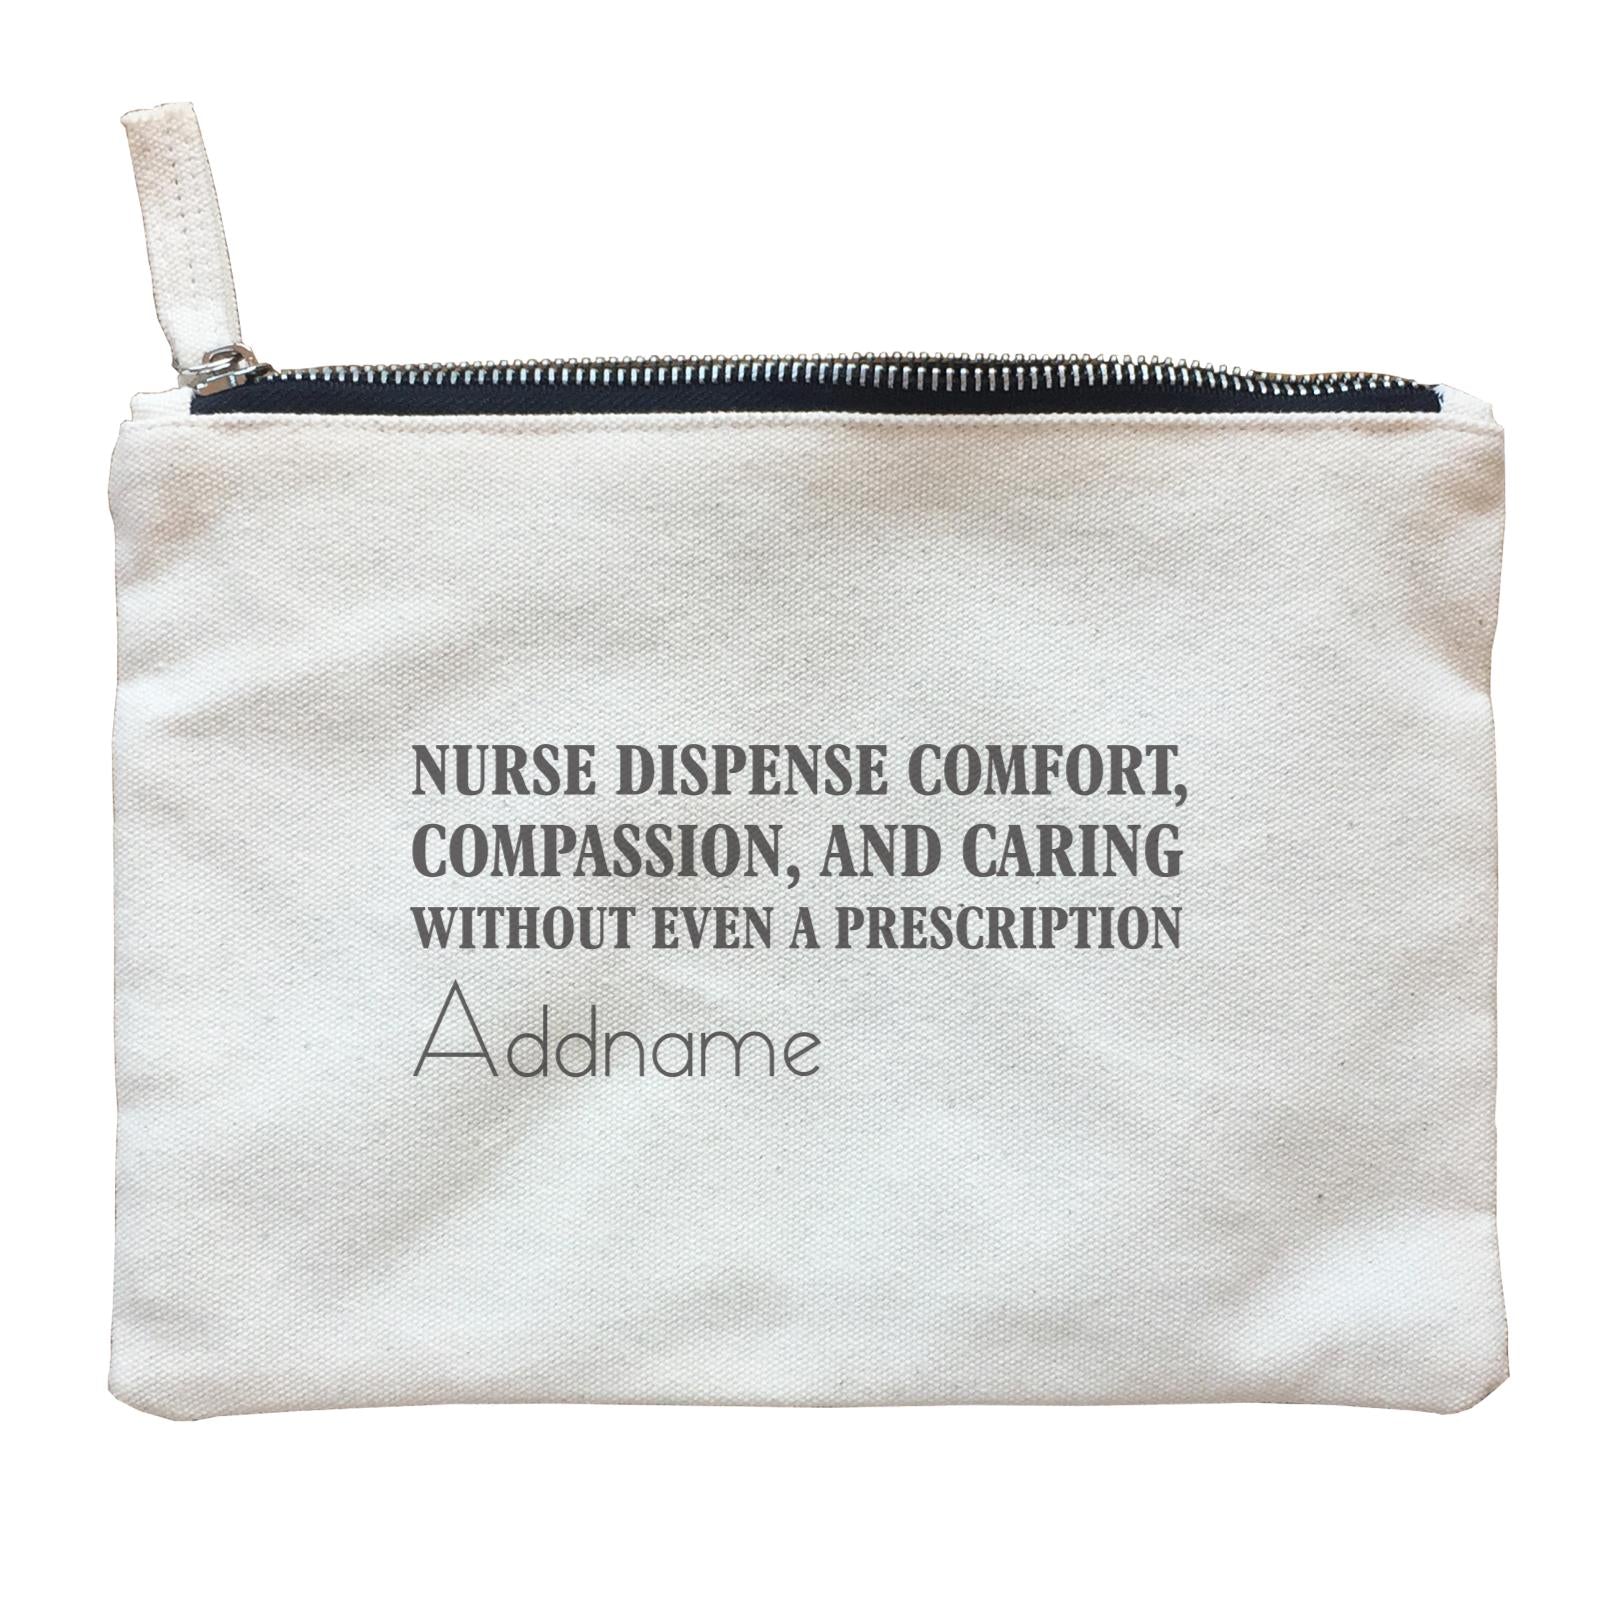 Nurse Dispense Comfort, Compassion, And Caring Without Even A Prescription Zipper Pouch